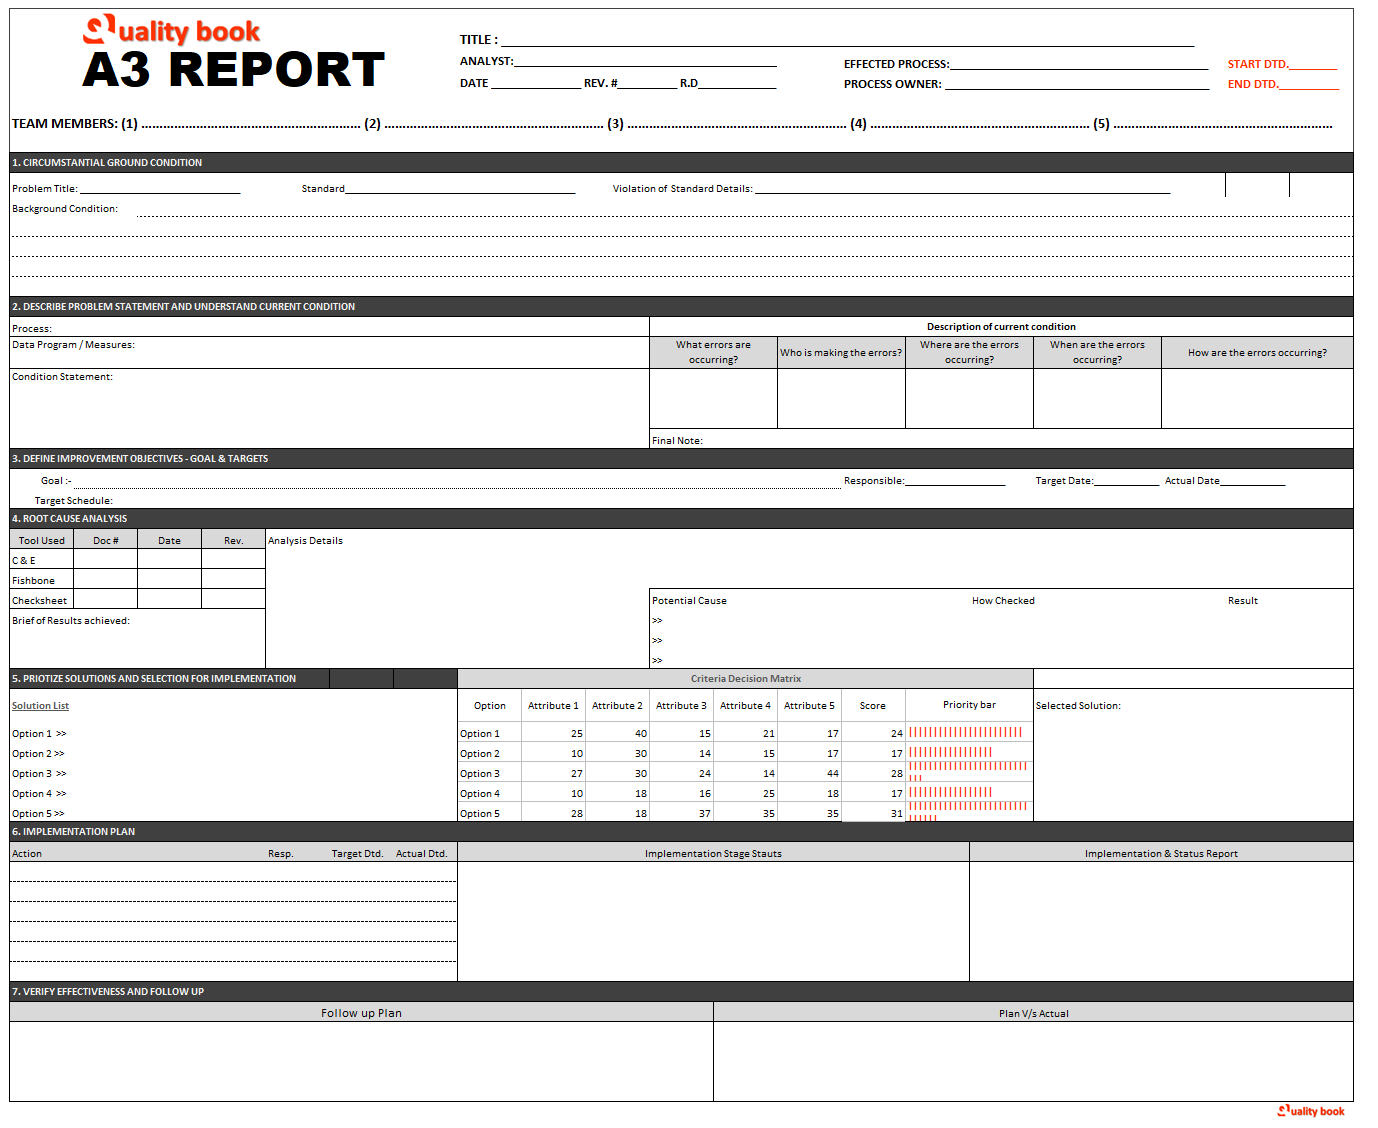 A3 report format, A3 report example, A3 report sample, A3 report template, A3 report pdf, A3 report ppt, A3 report excel, A3 report xls, A3 report doc, A3 report template excel, A3 report example excel 